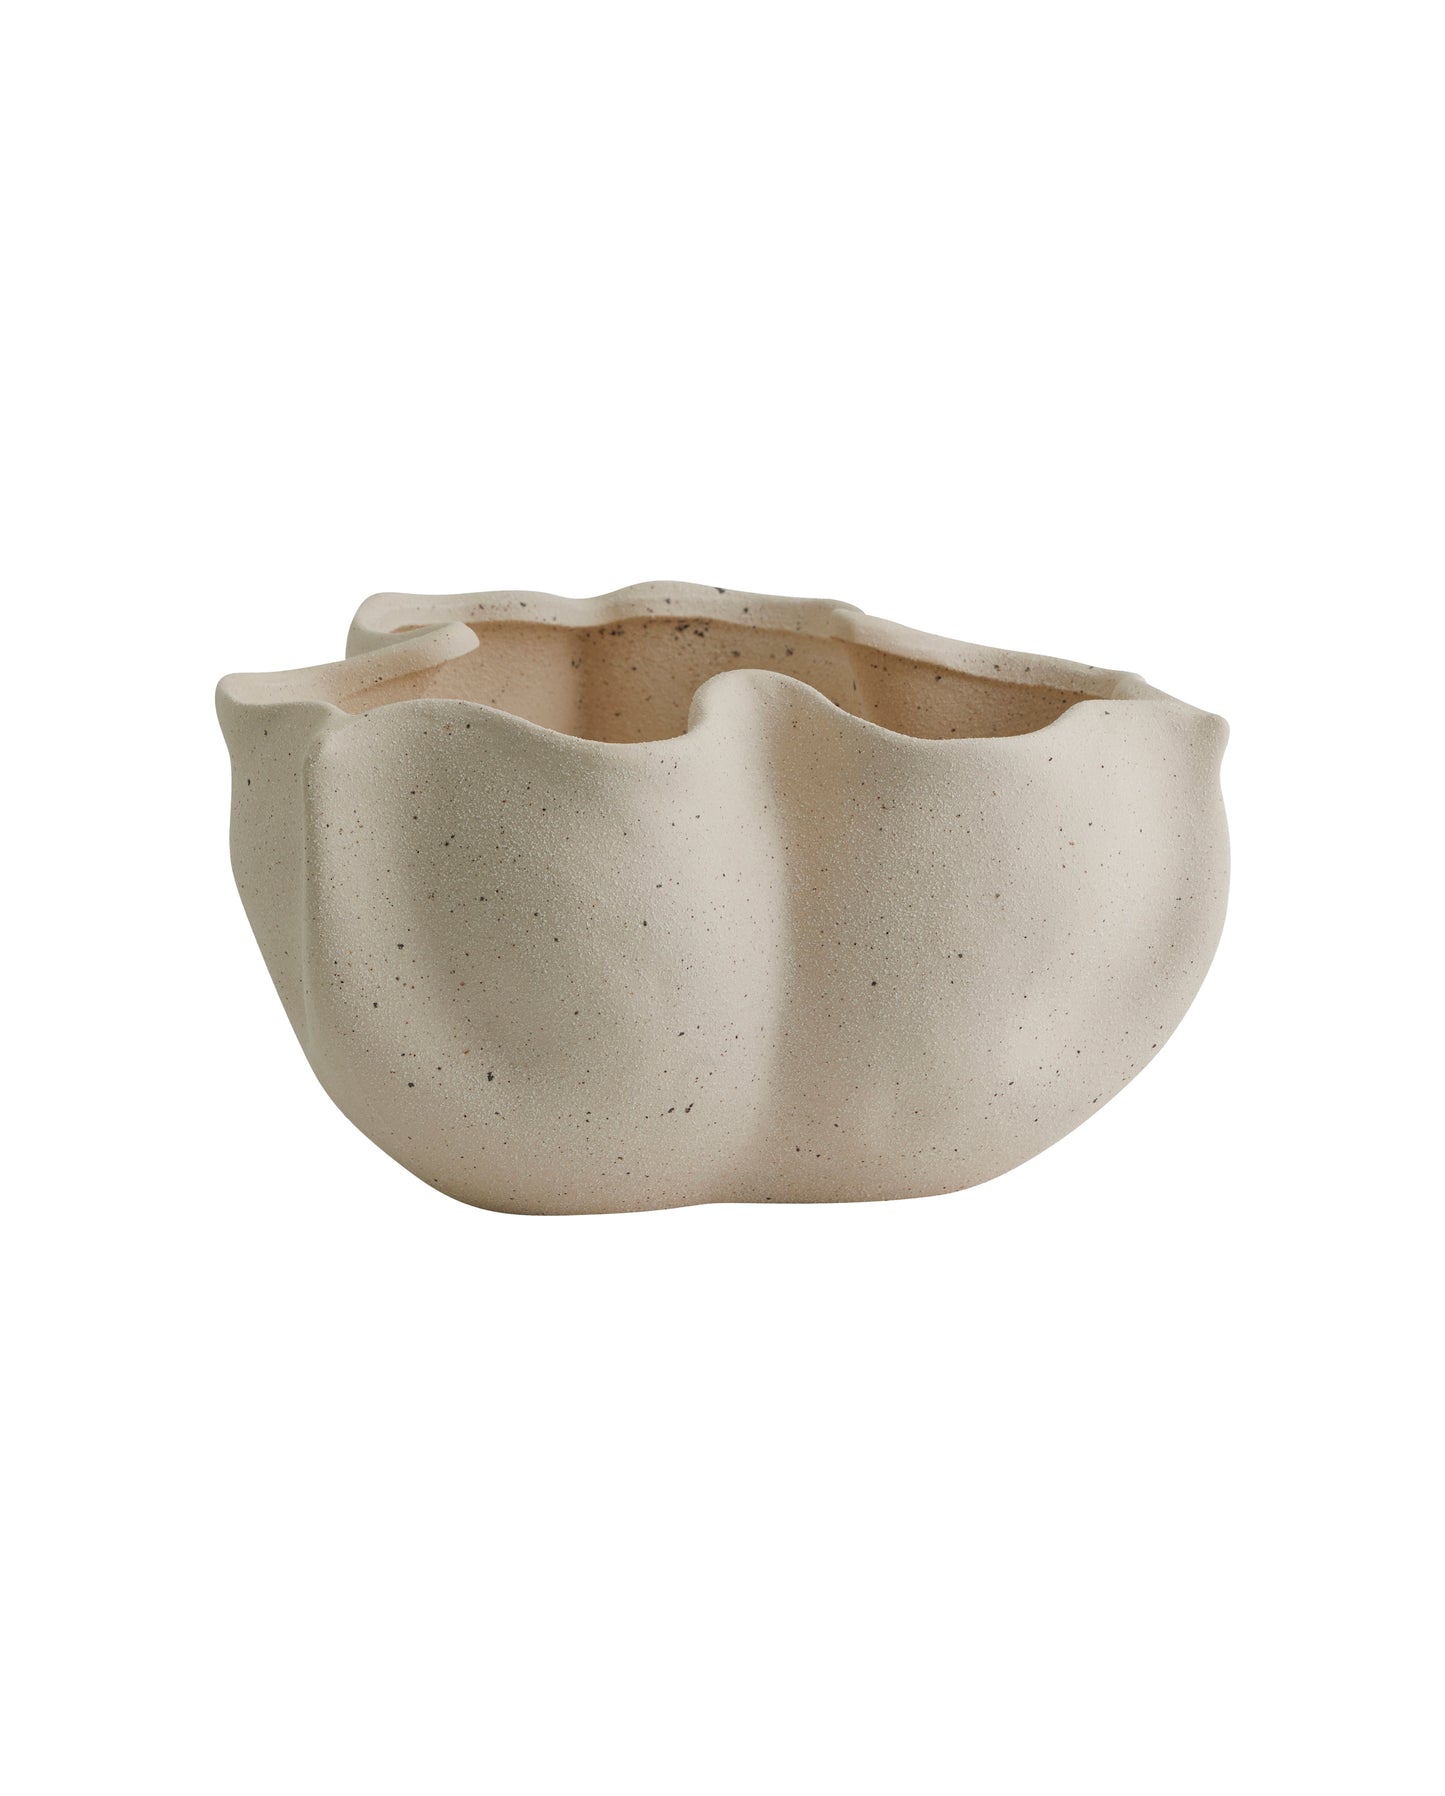 Decorative ceramic vessel